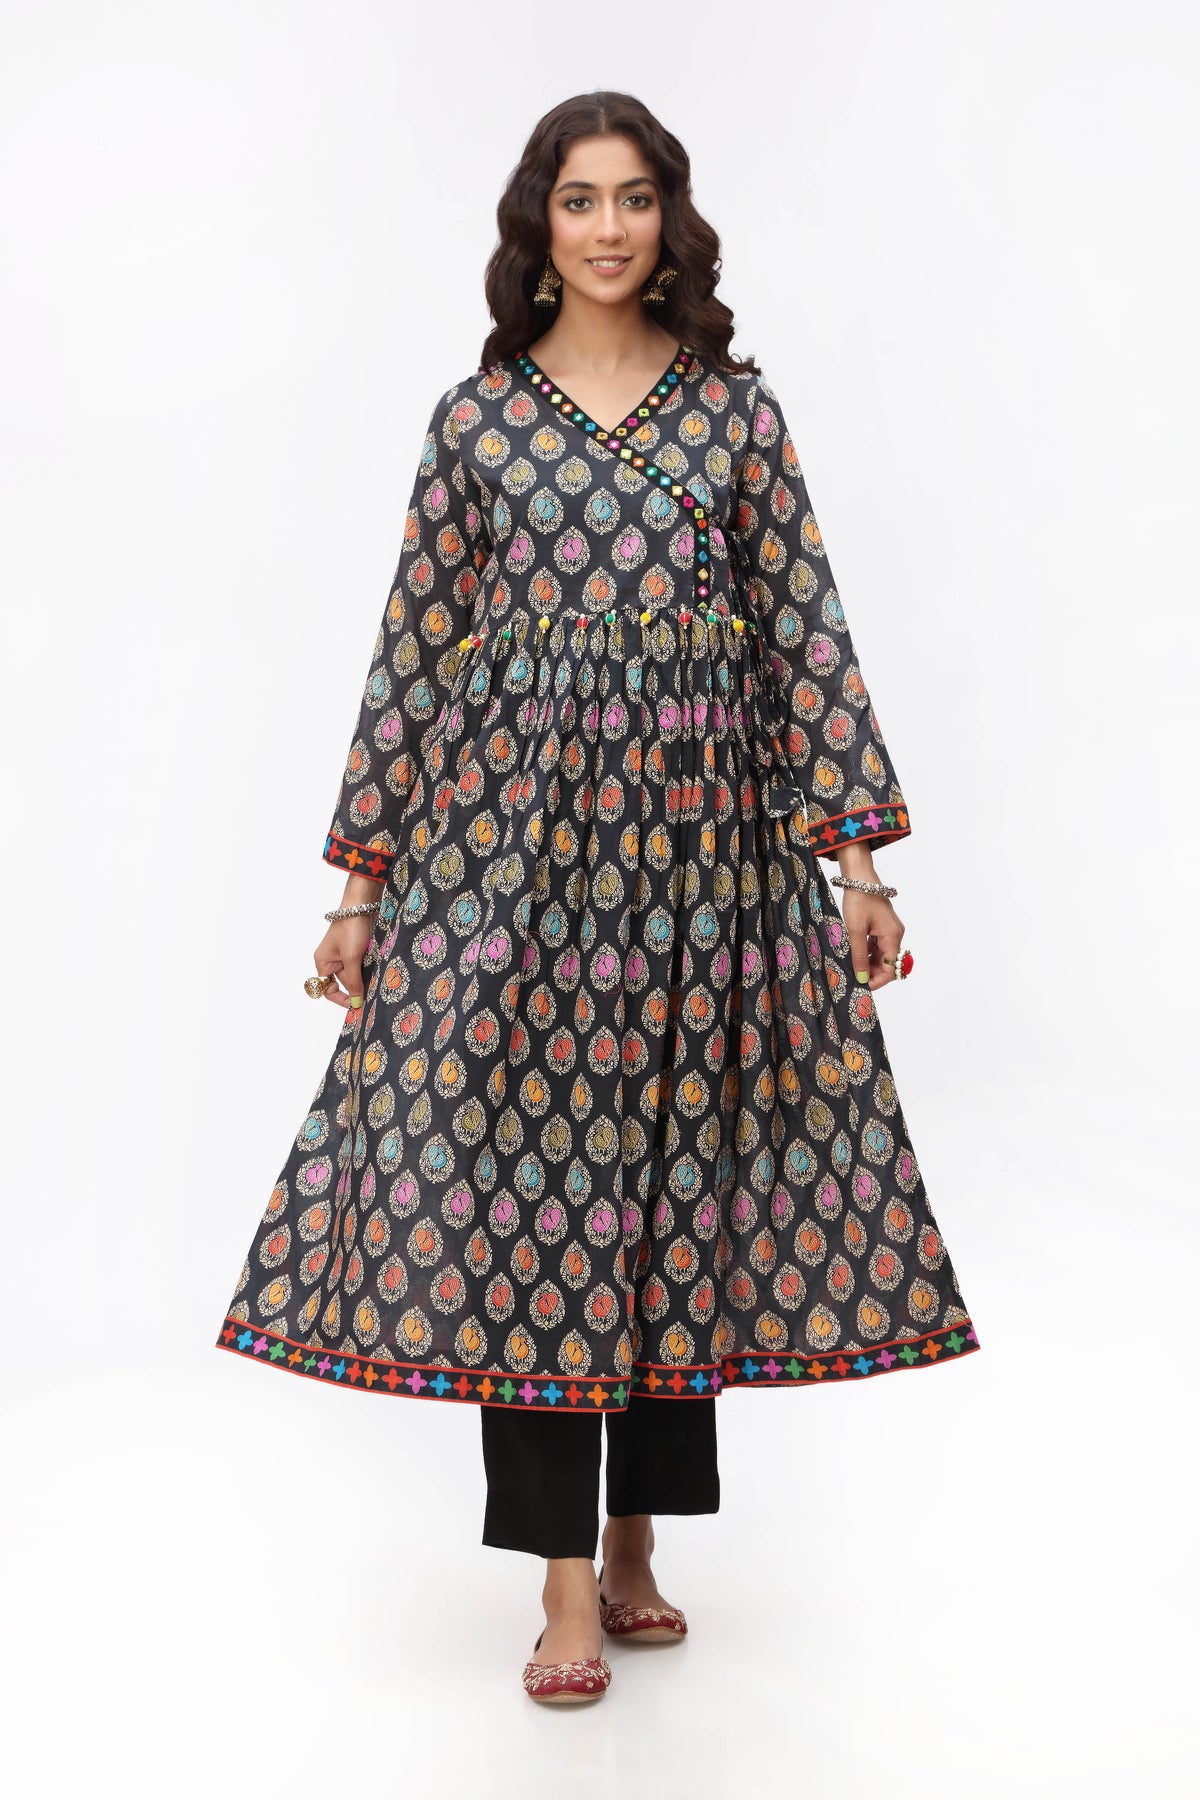 Morr Kahani in Multi coloured Printed Lawn fabric